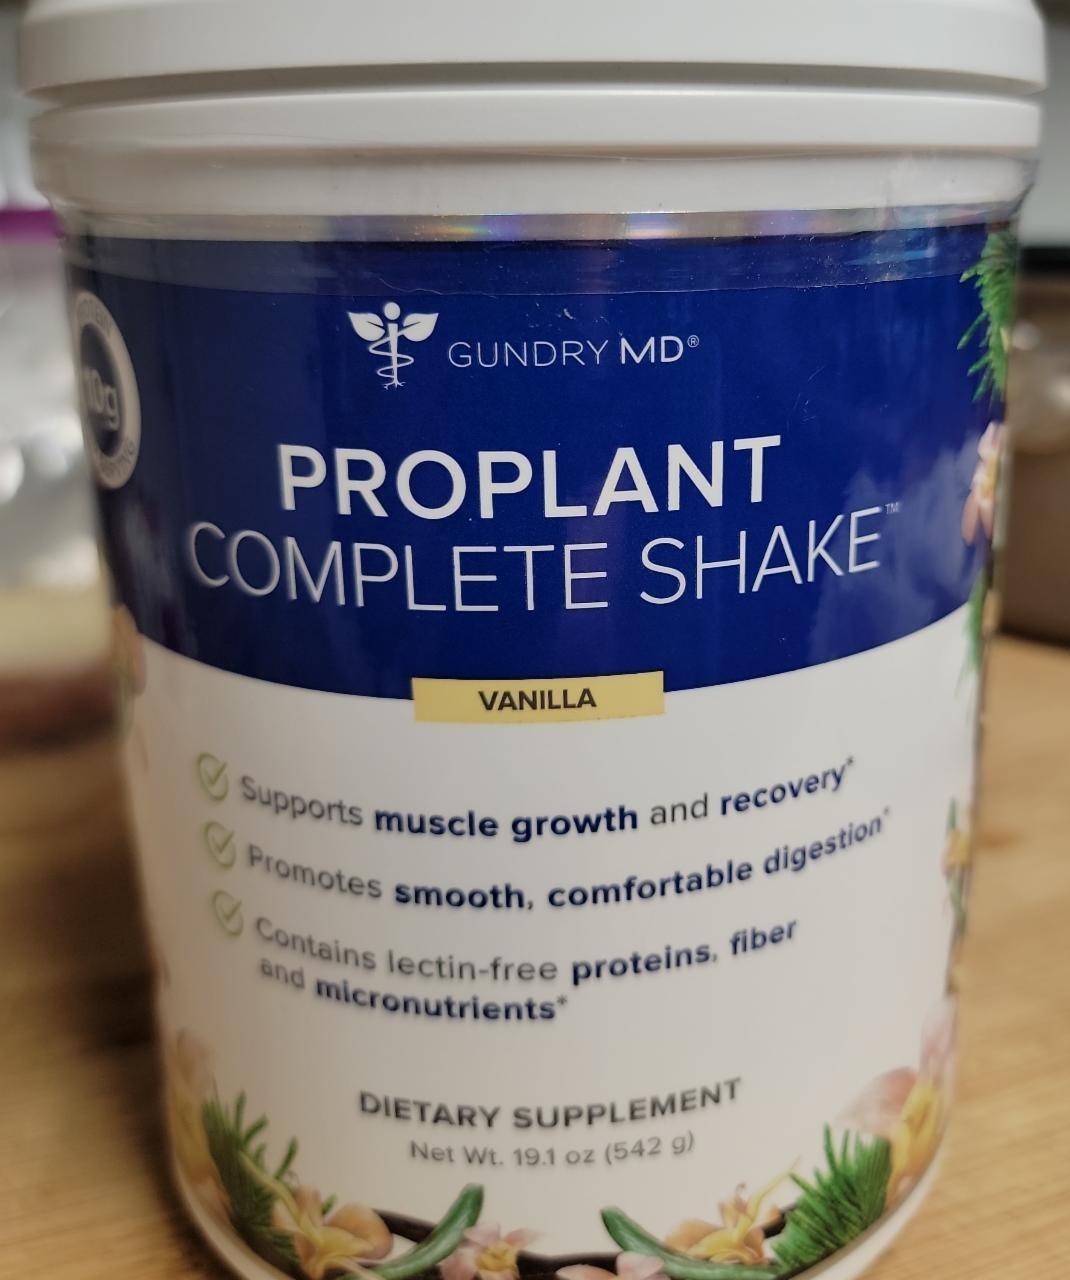 Fotografie - Proplant Complete Shake Vanilla Gundry MD